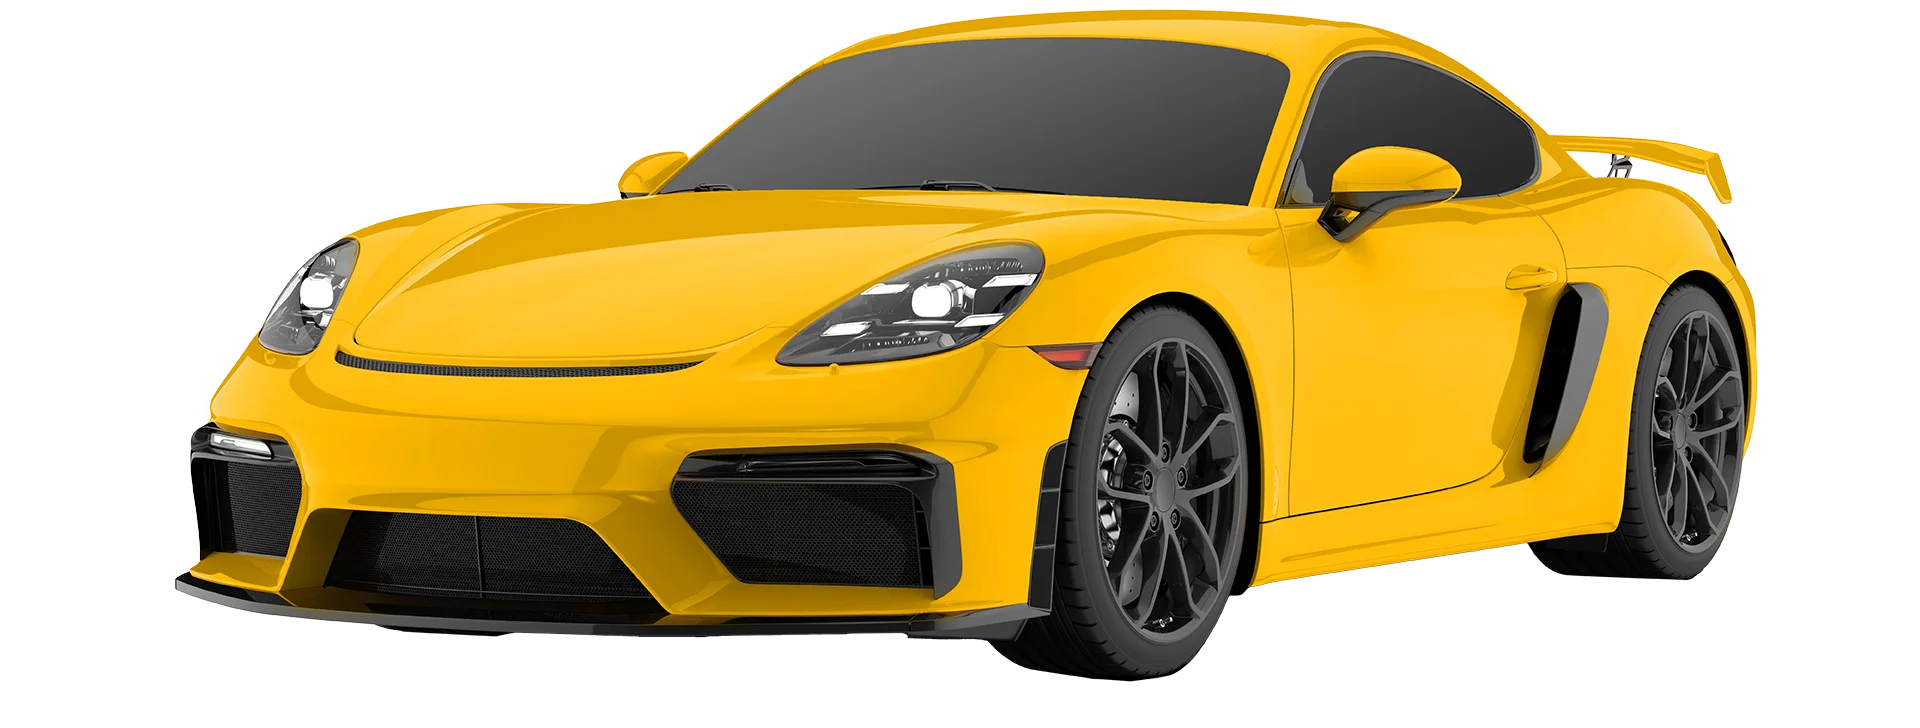 Auto-gelb